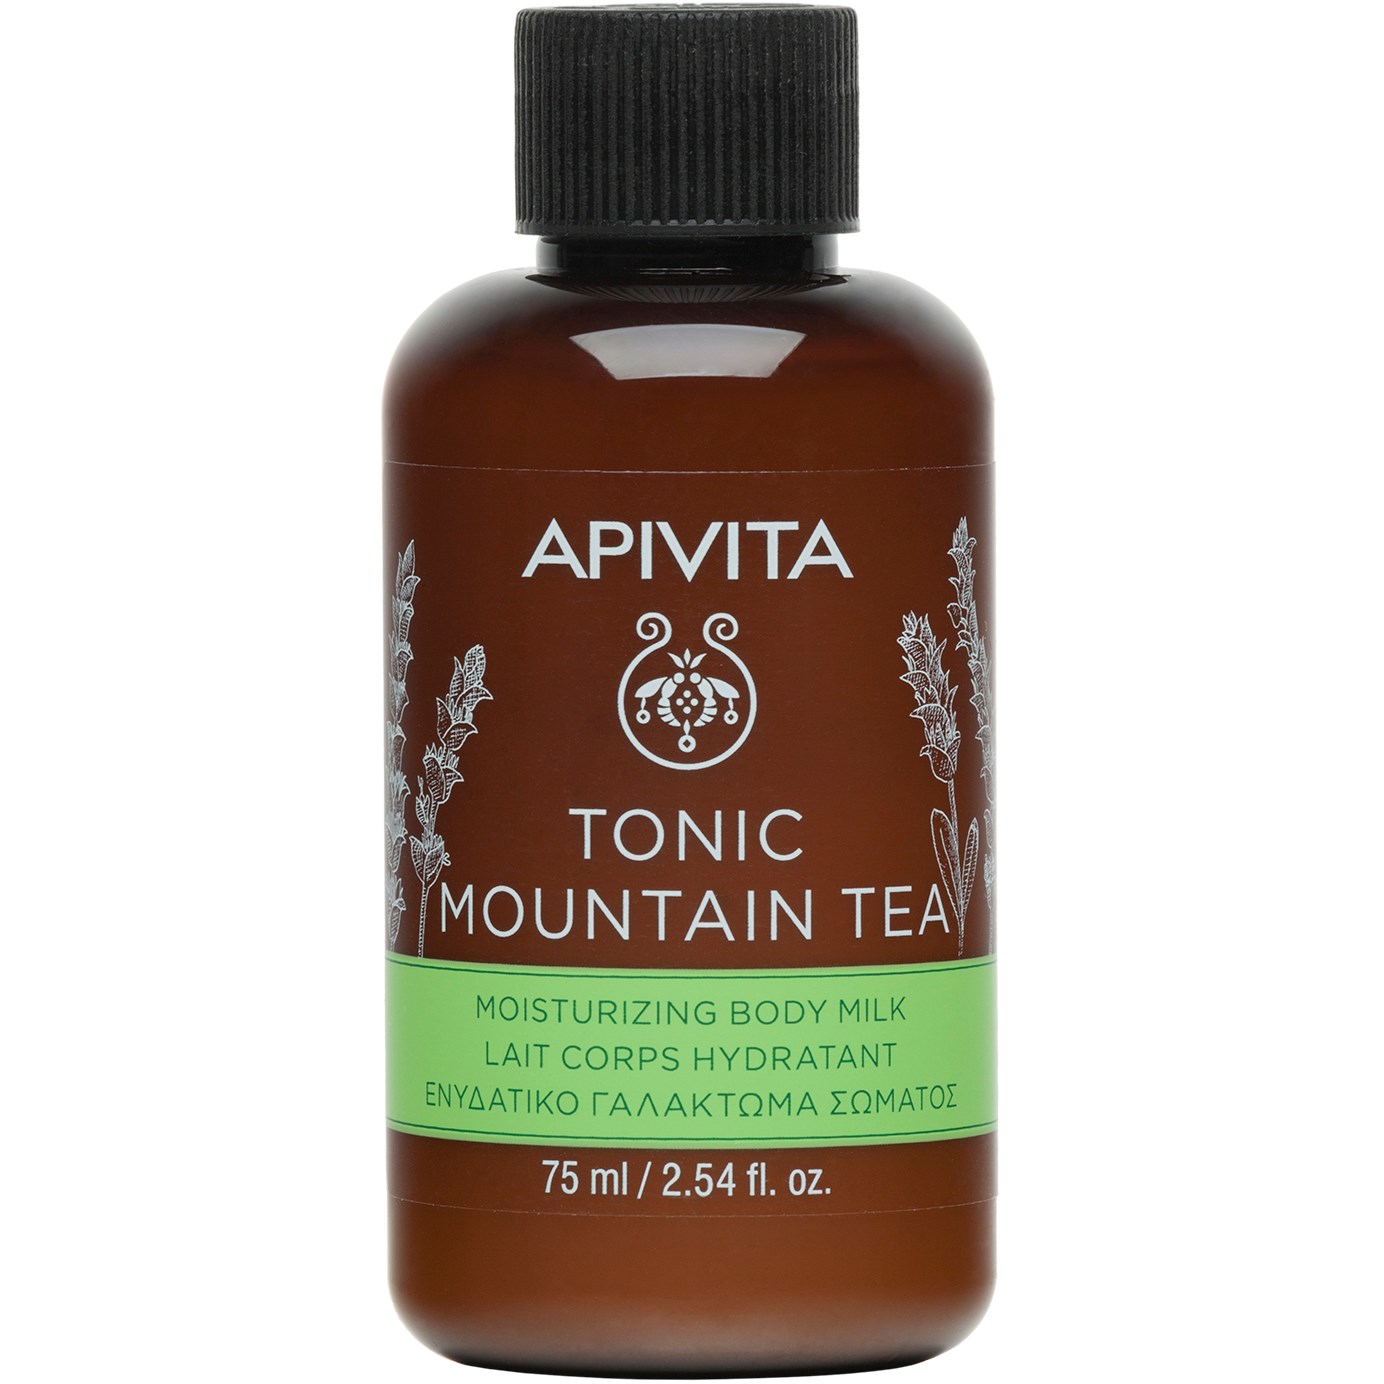 Bilde av Apivita Tonic Mountain Tea Travel Size Moisturizing Body Milk With Mou